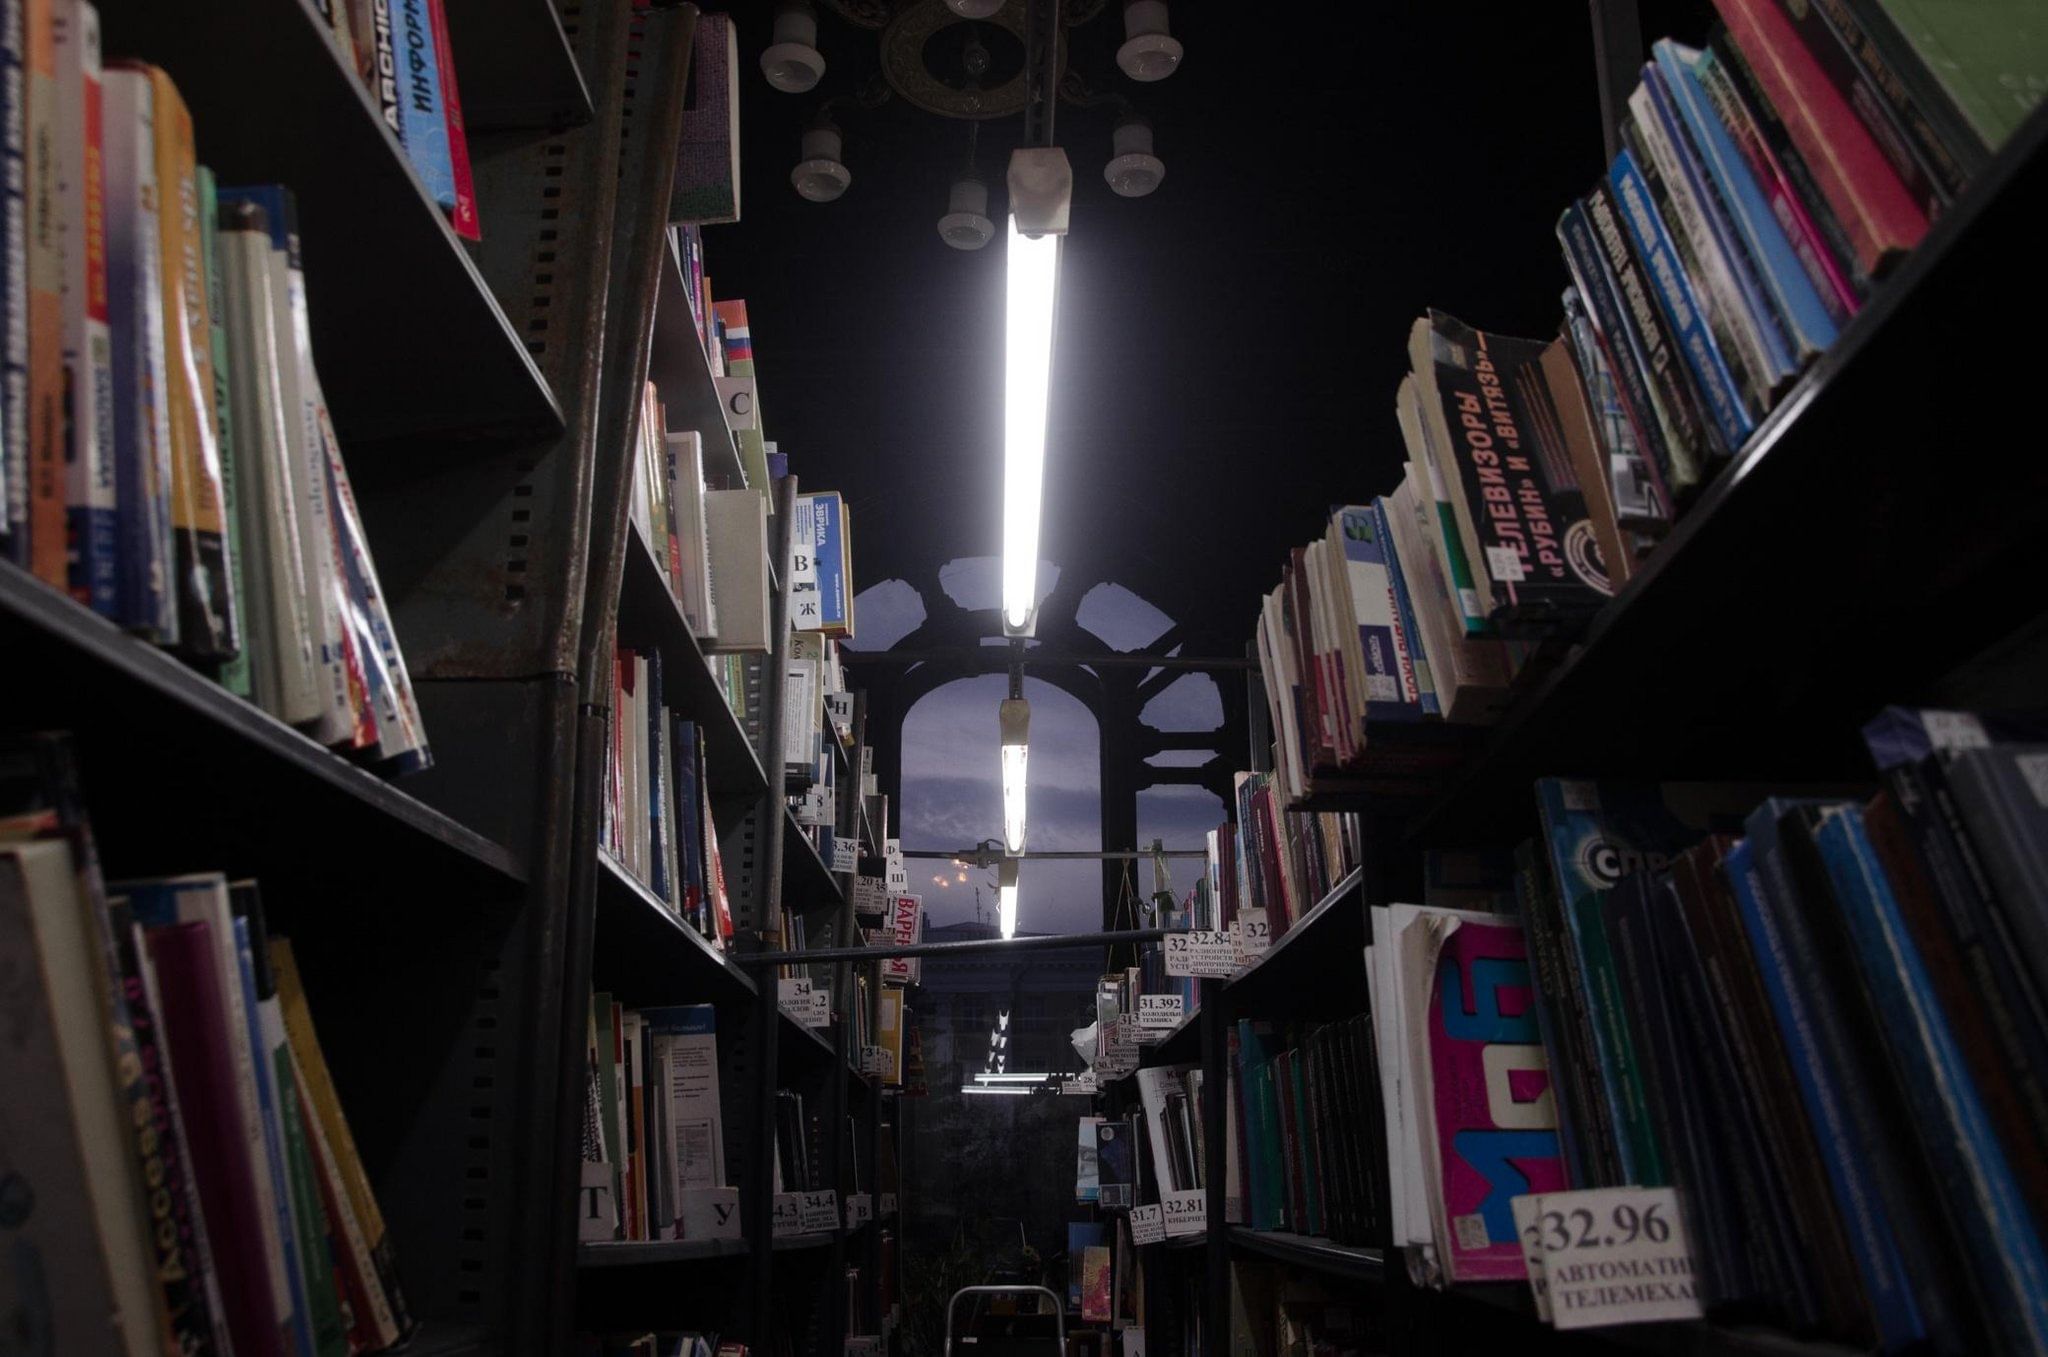 Сказка о библиотеке ночью. Ночь в библиотеке. Ночь в библиотеке чтение. Путешествие по ночной библиотеке. Библионочь.